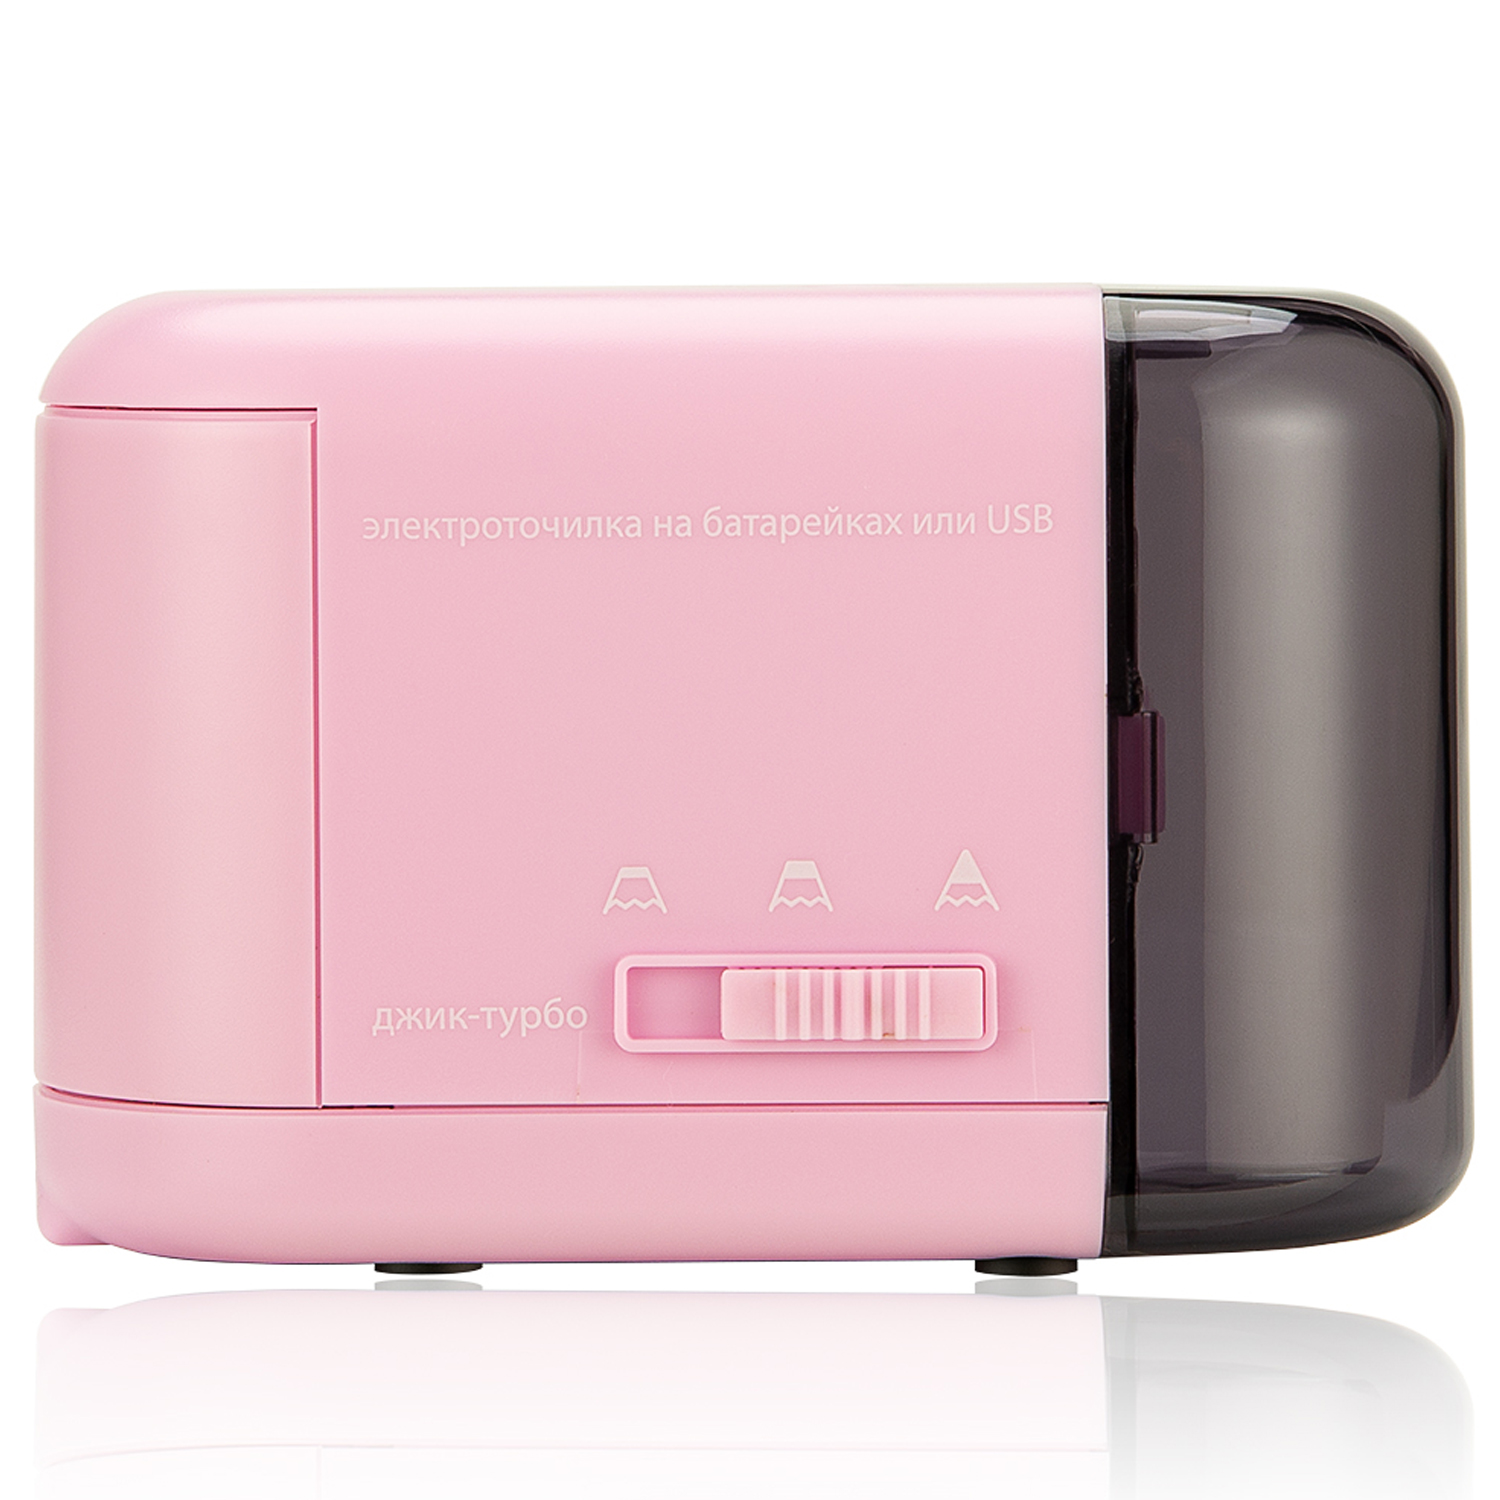 Точилка Электрическая Джик-Турбо USB/на батарейках со спиралевидным лезвием Розовая - фото 5